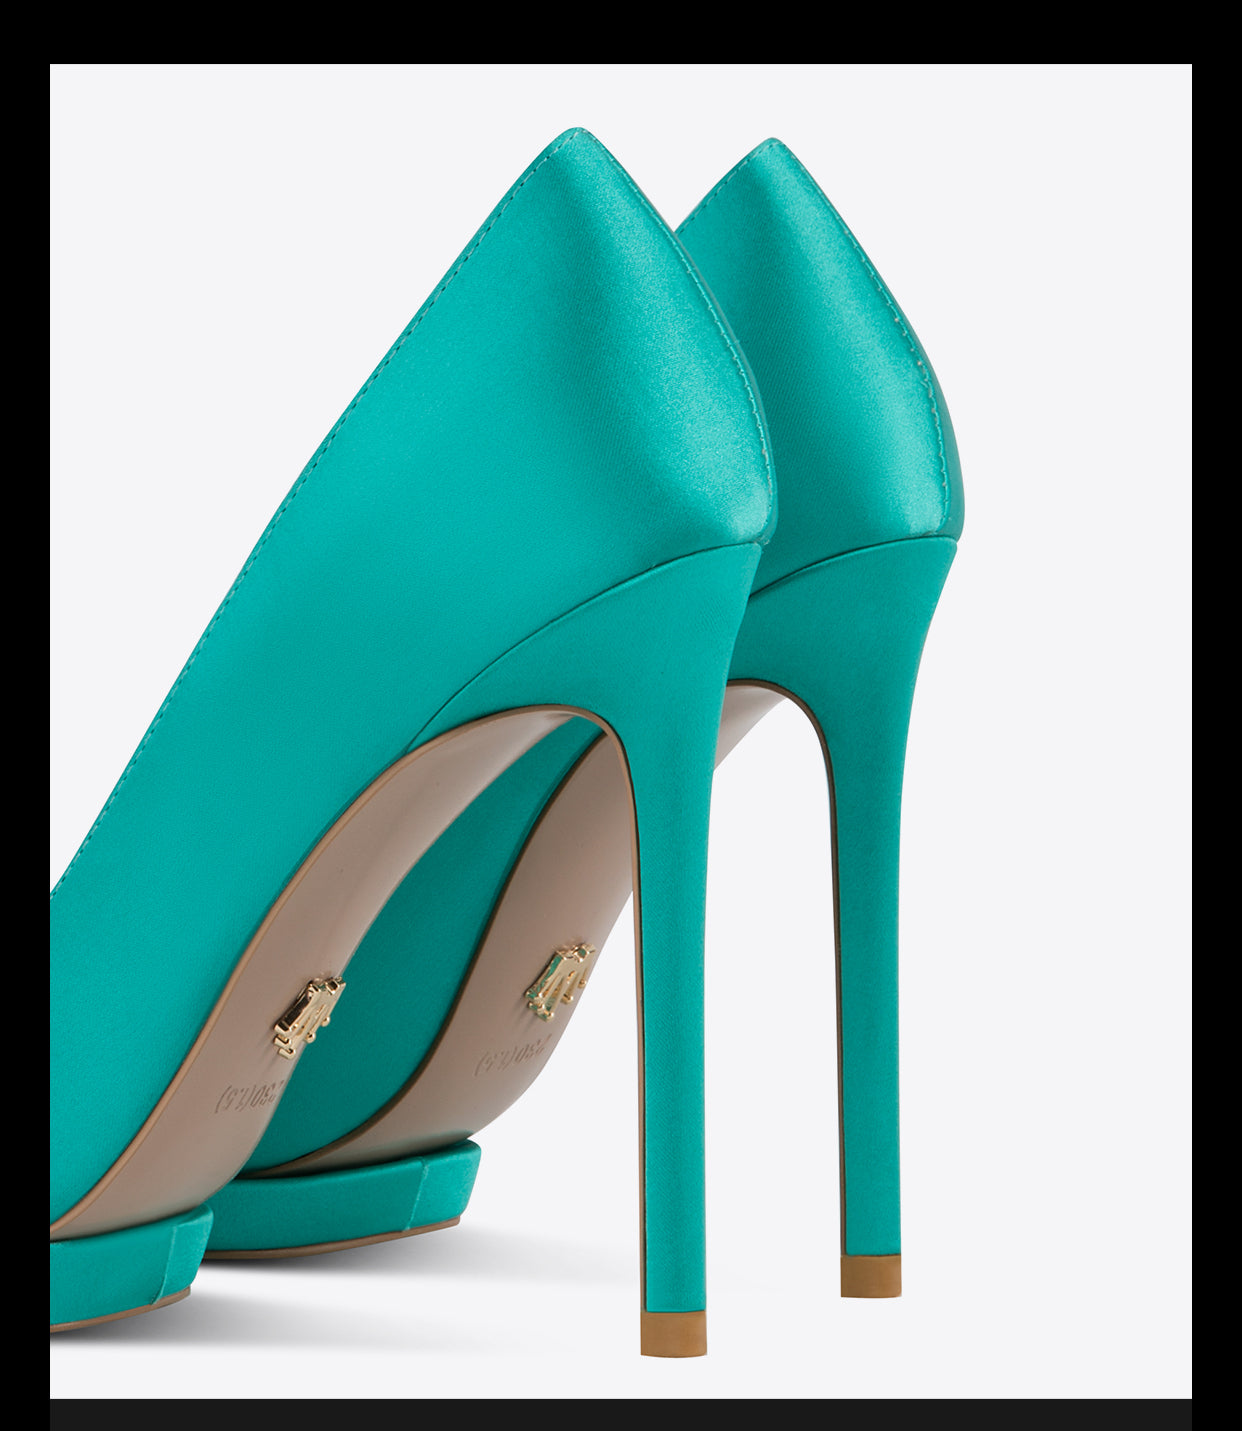 Fabfei sexy tiffany blue platform pointed toe stiletto pumps shoes - Tiff